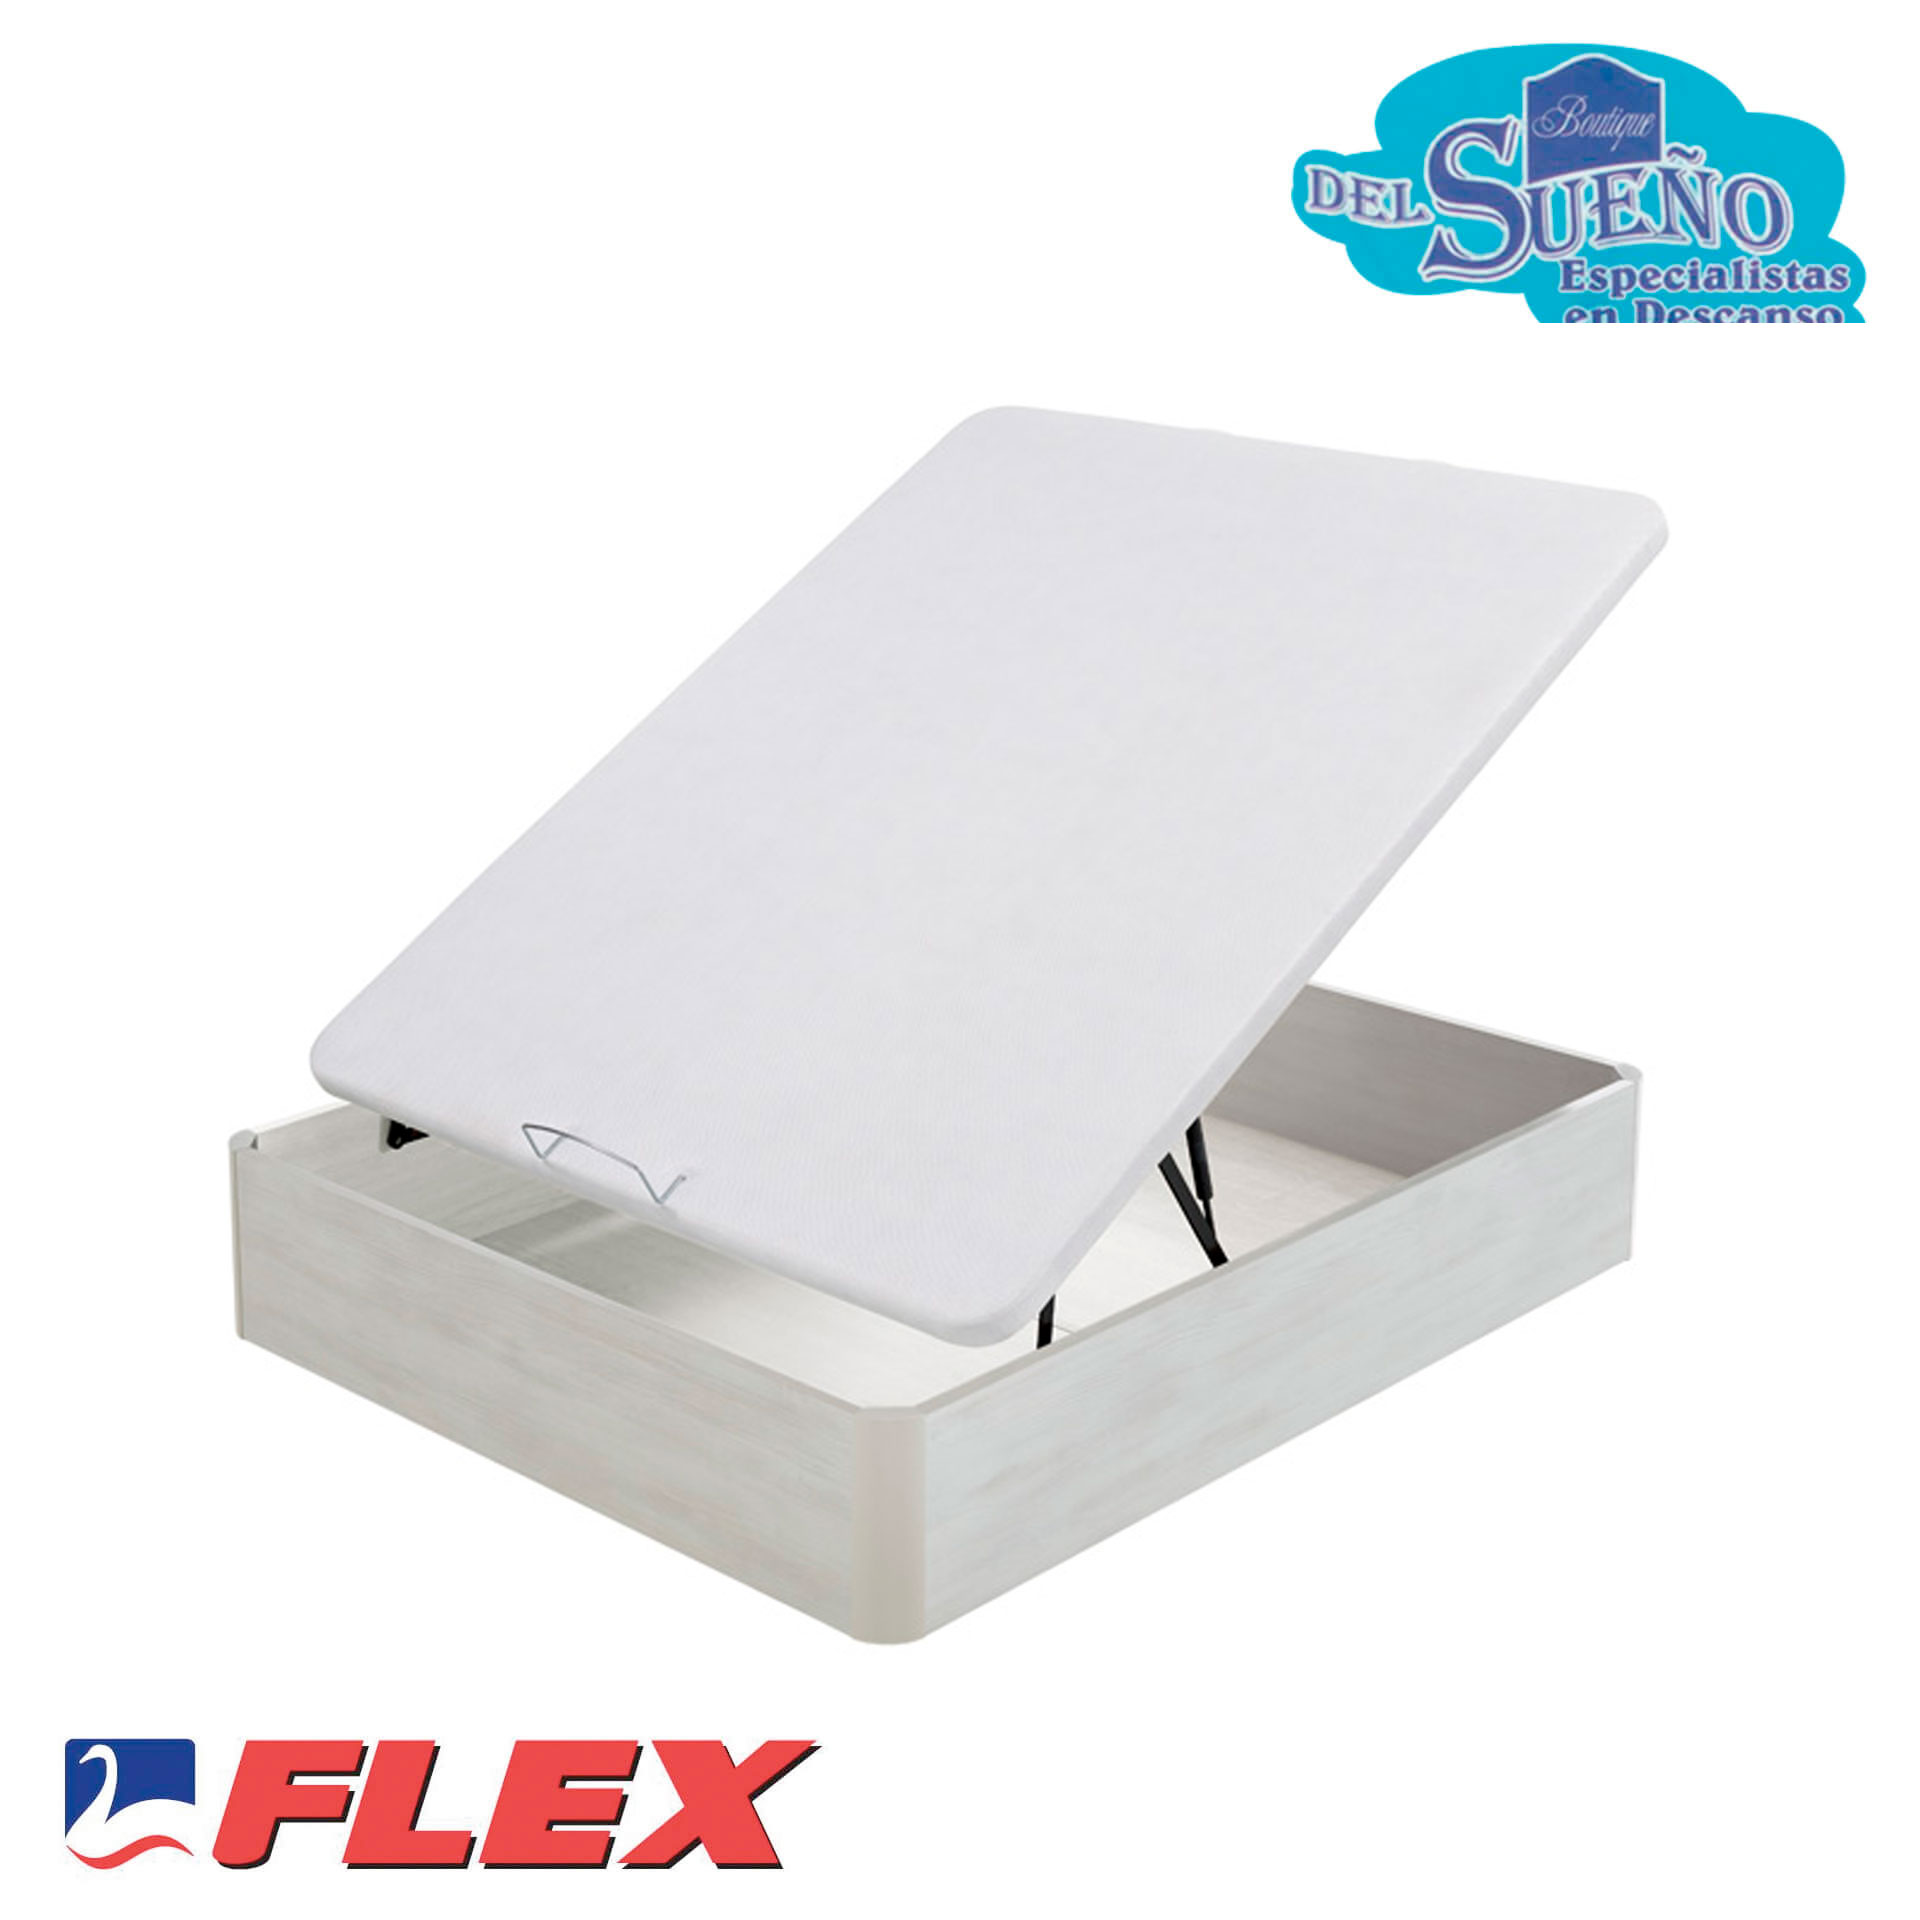 Flex - Canapé Abatible Madera Transpirable Tapa 3D - 180X190, Color Blanco